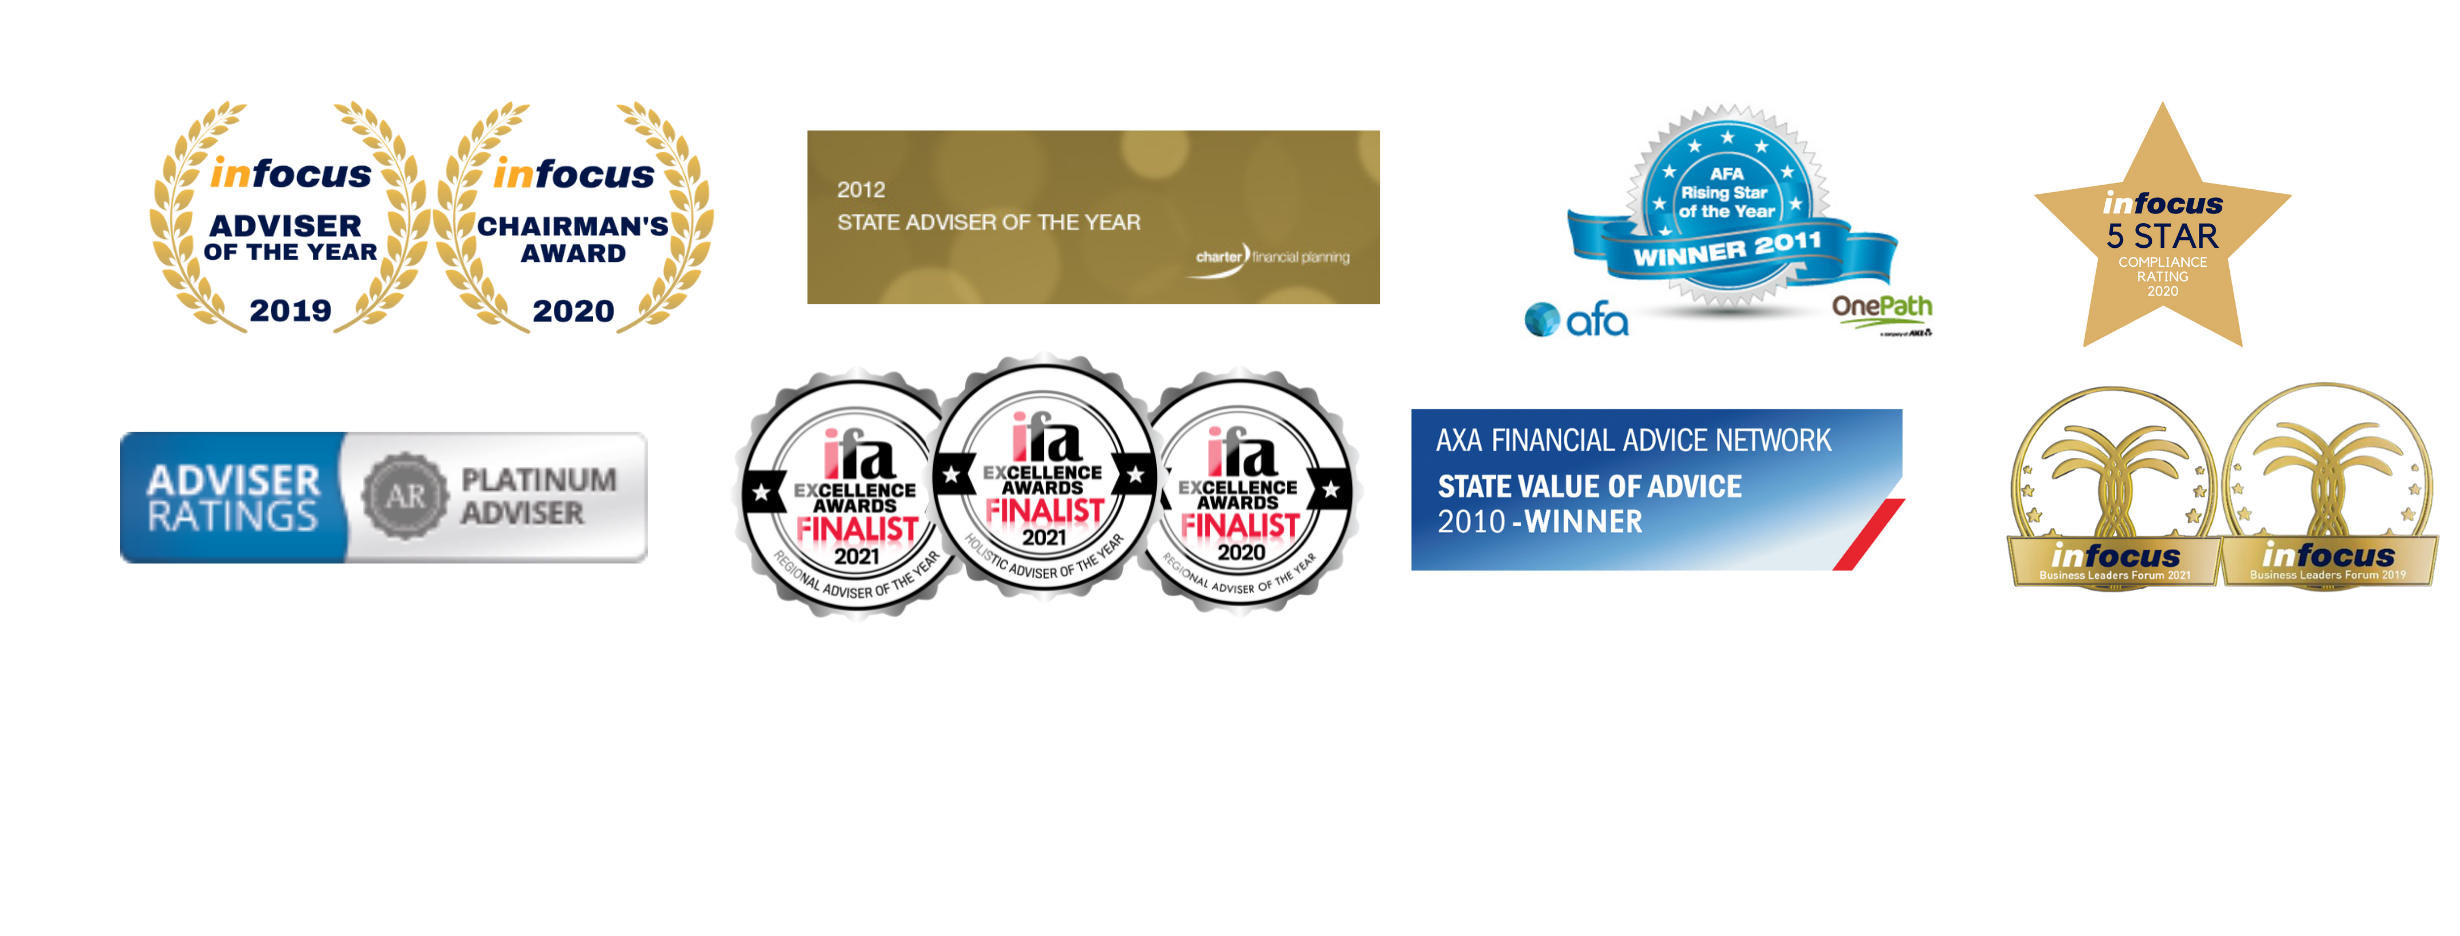 Award Winning Financial Advisers